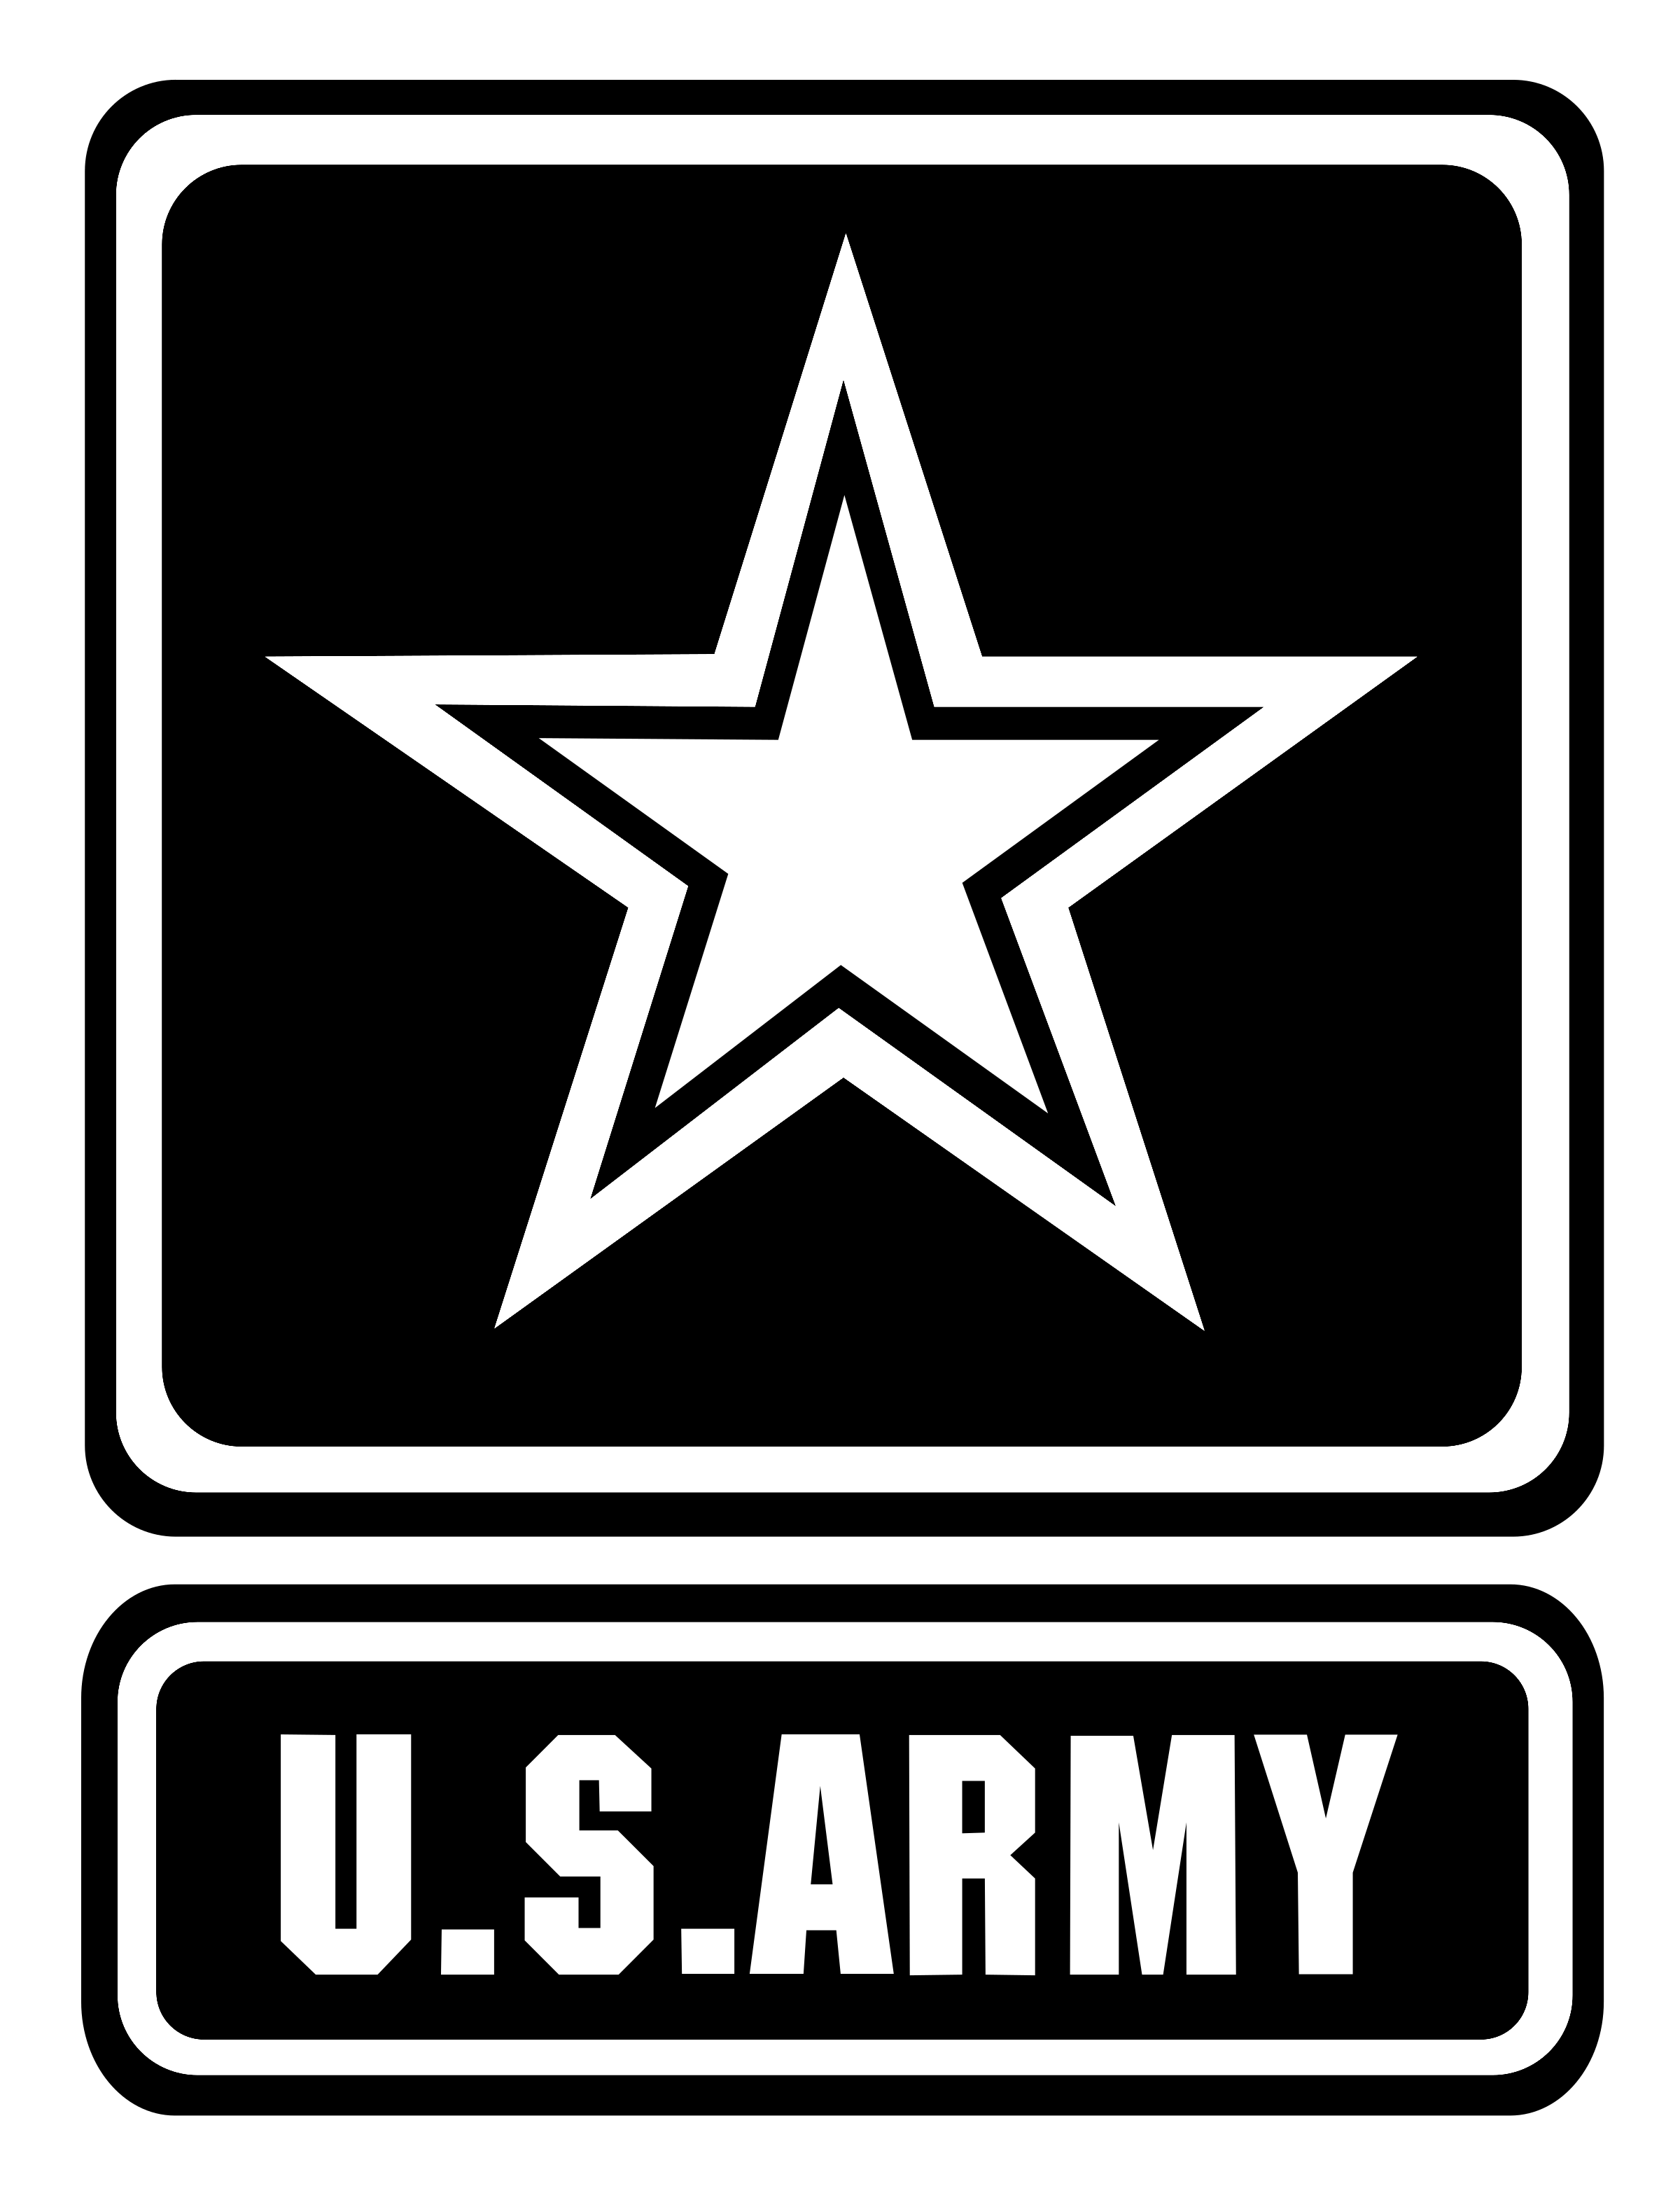 U.S. Army Logo - U.S. Army Logo PNG Transparent & SVG Vector